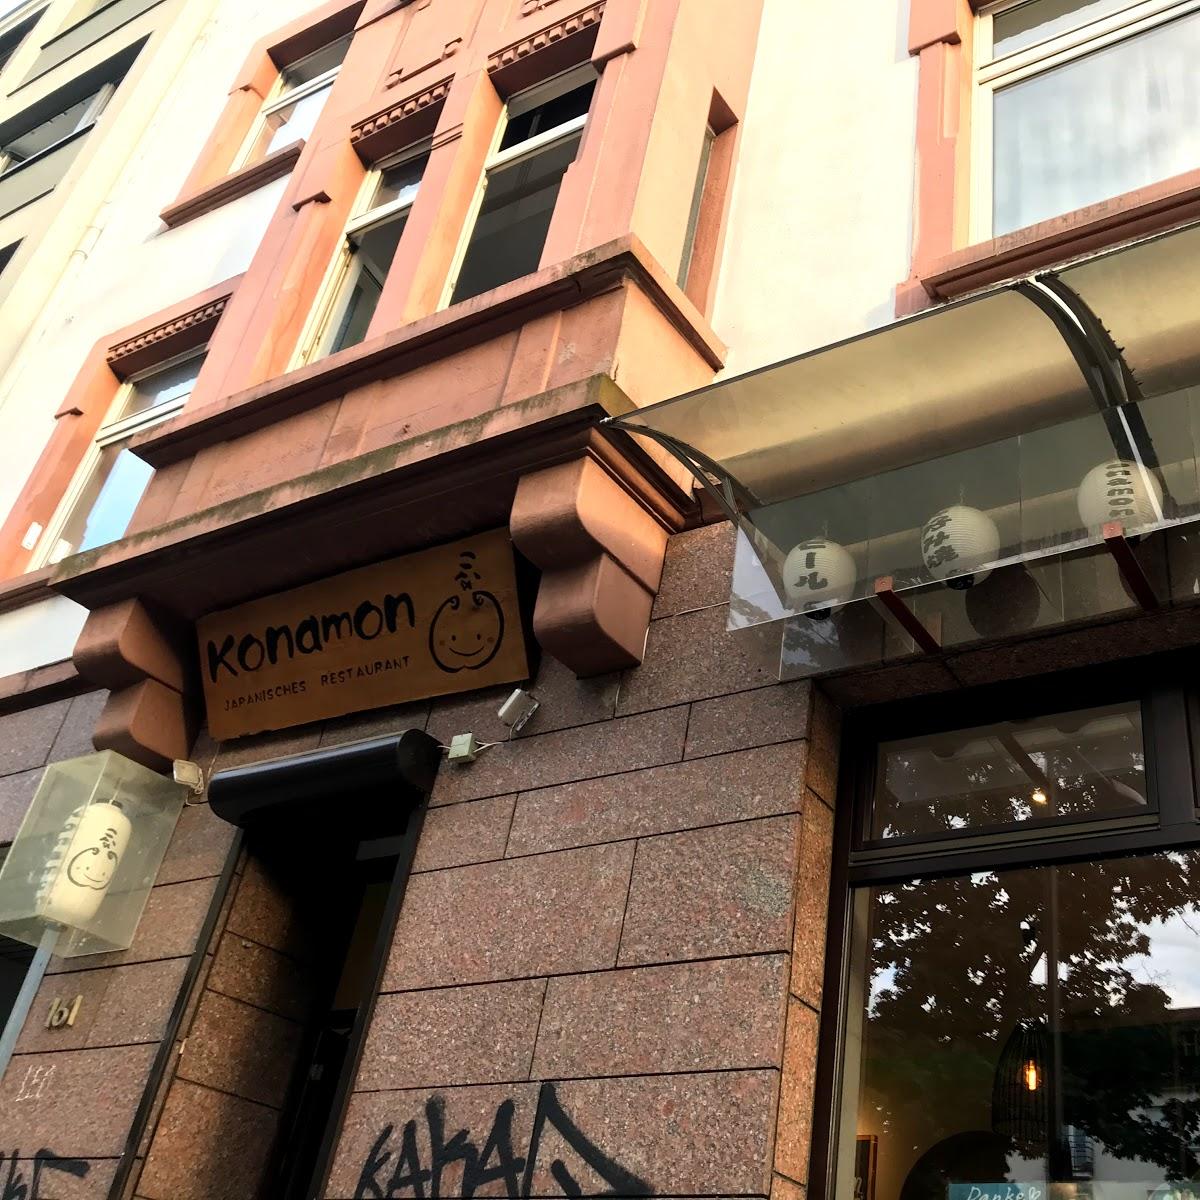 Restaurant "Konamon" in Frankfurt am Main